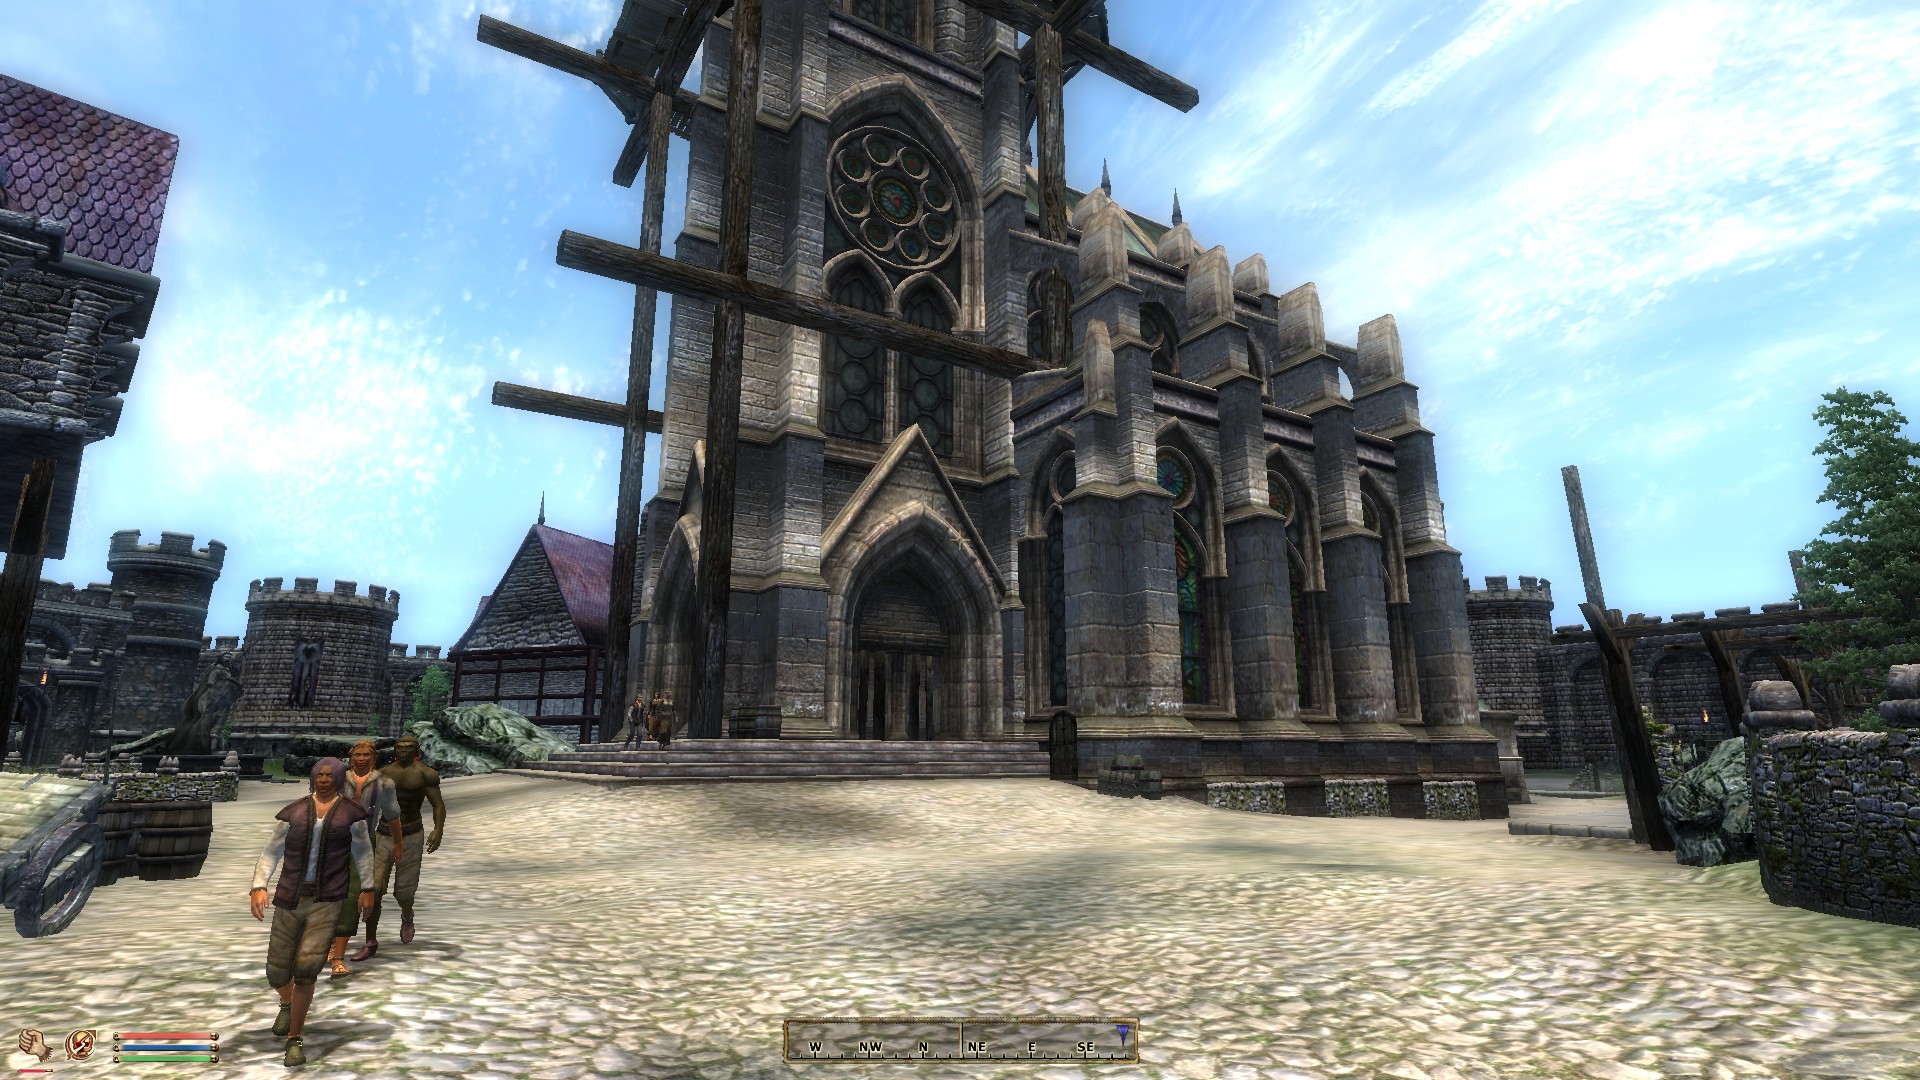 Kvatch rebuilt - 🧡 Morrowind is still the best Elder Scrolls game. 